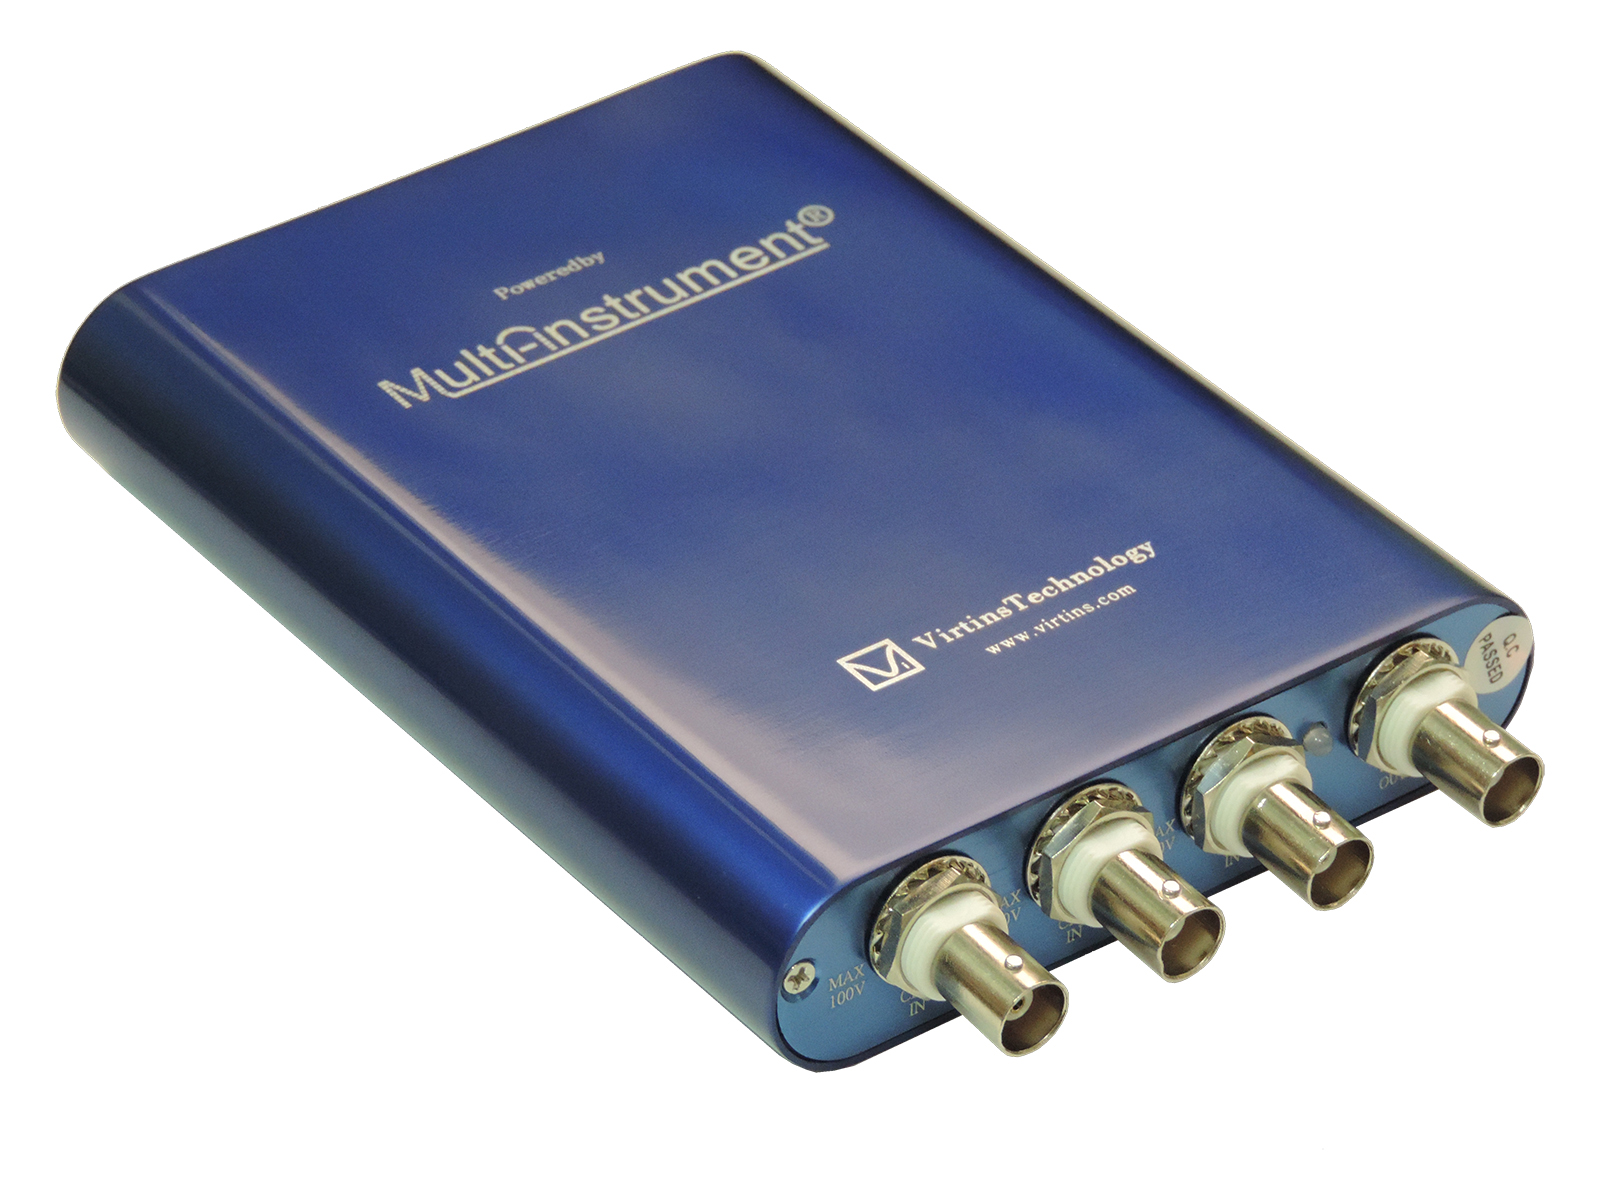 VT DSO-2A10E: 电脑USB示波器、频谱分析仪、任意波形信号发生器